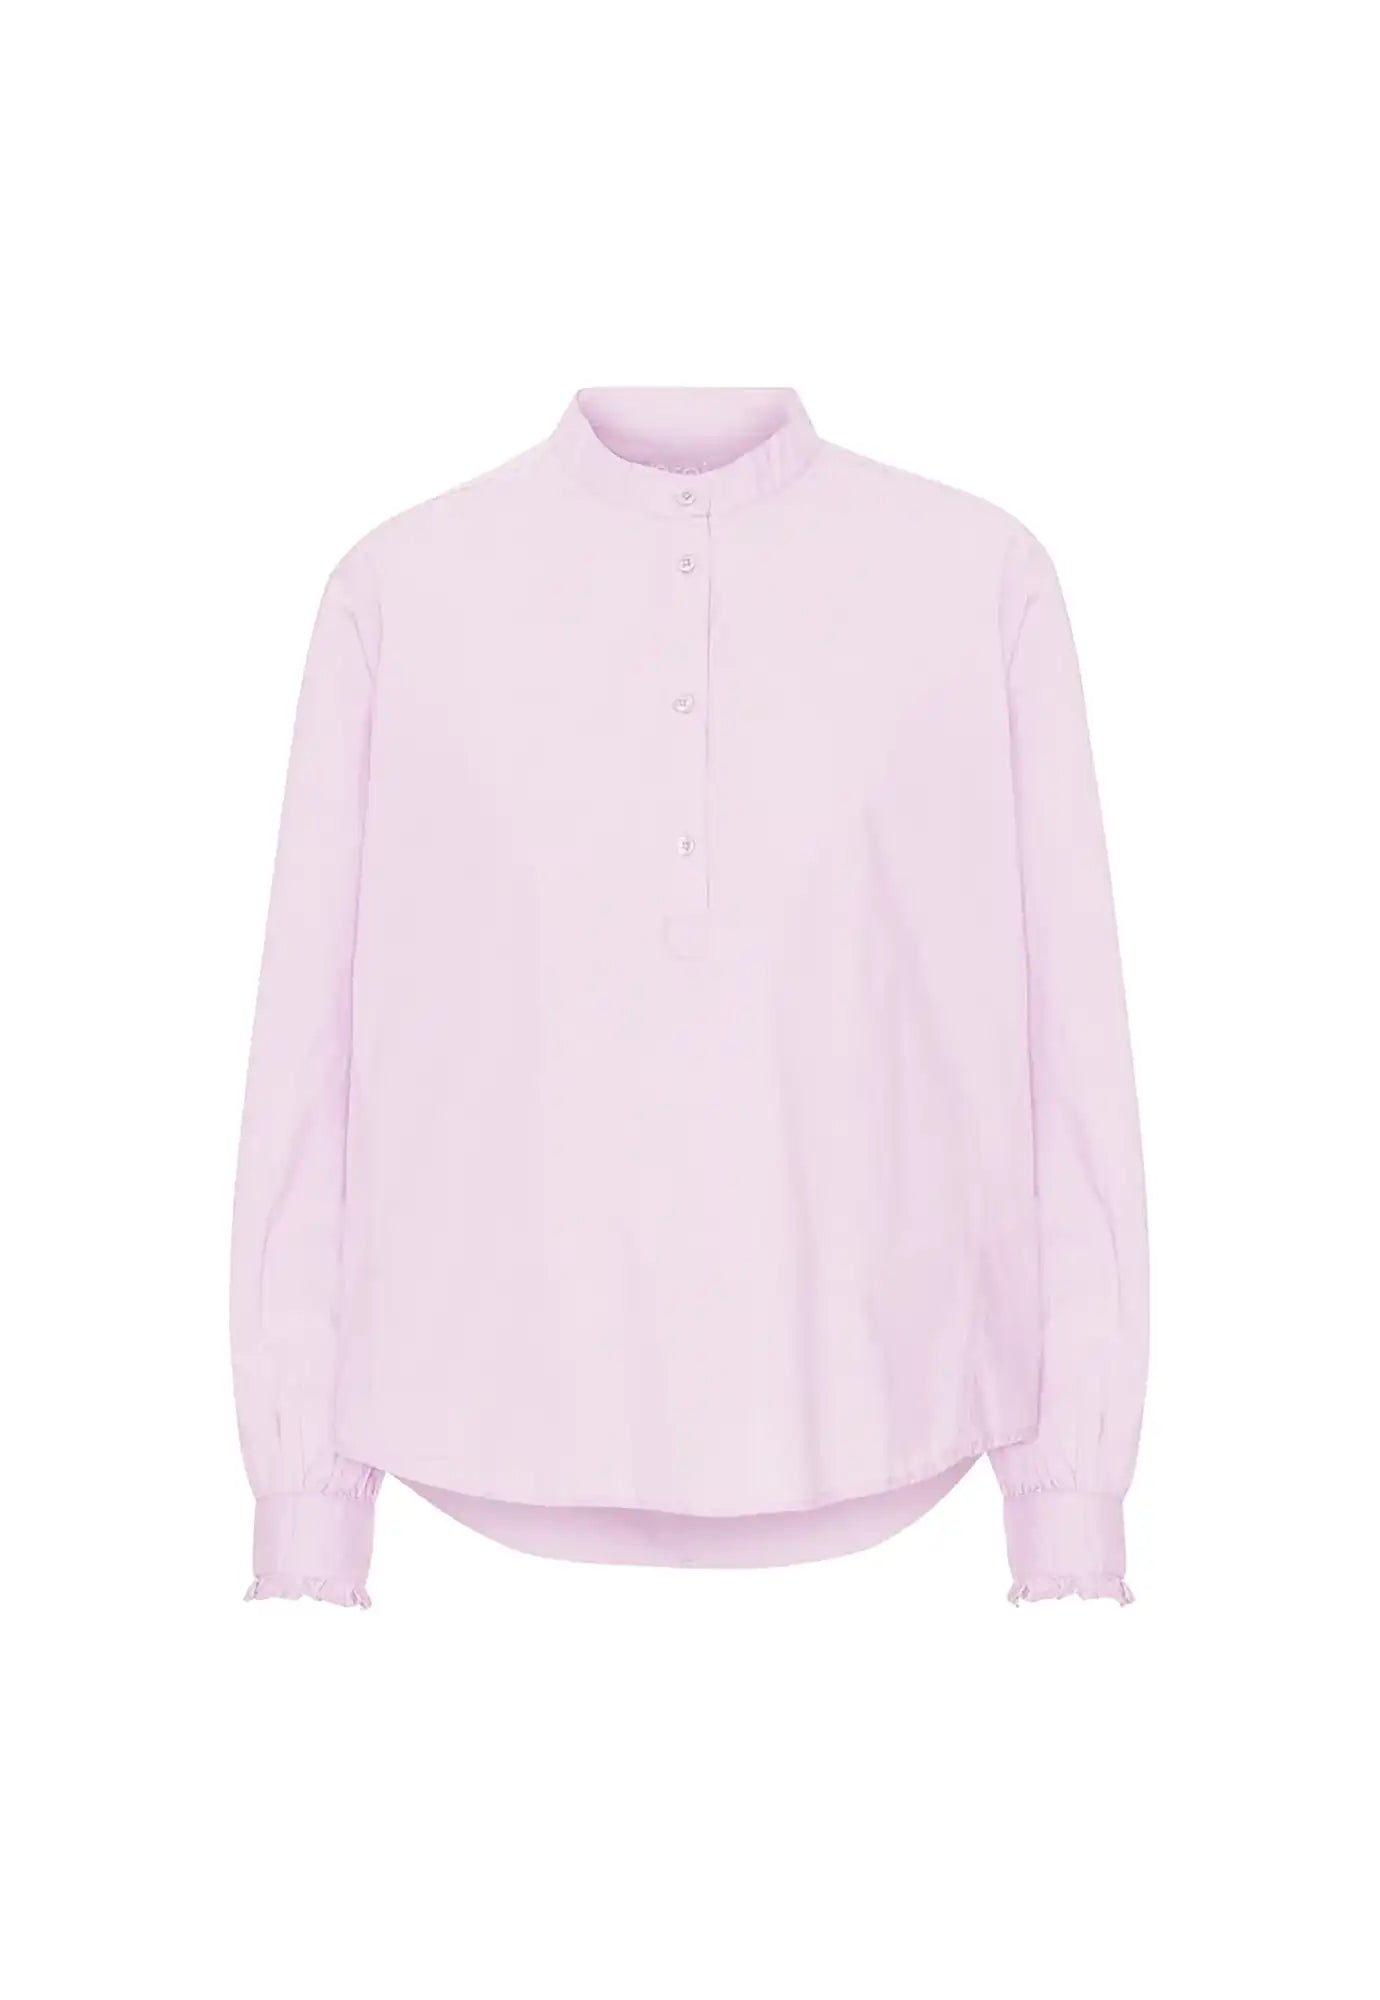 project aj117 - hedwig shirt - lilac